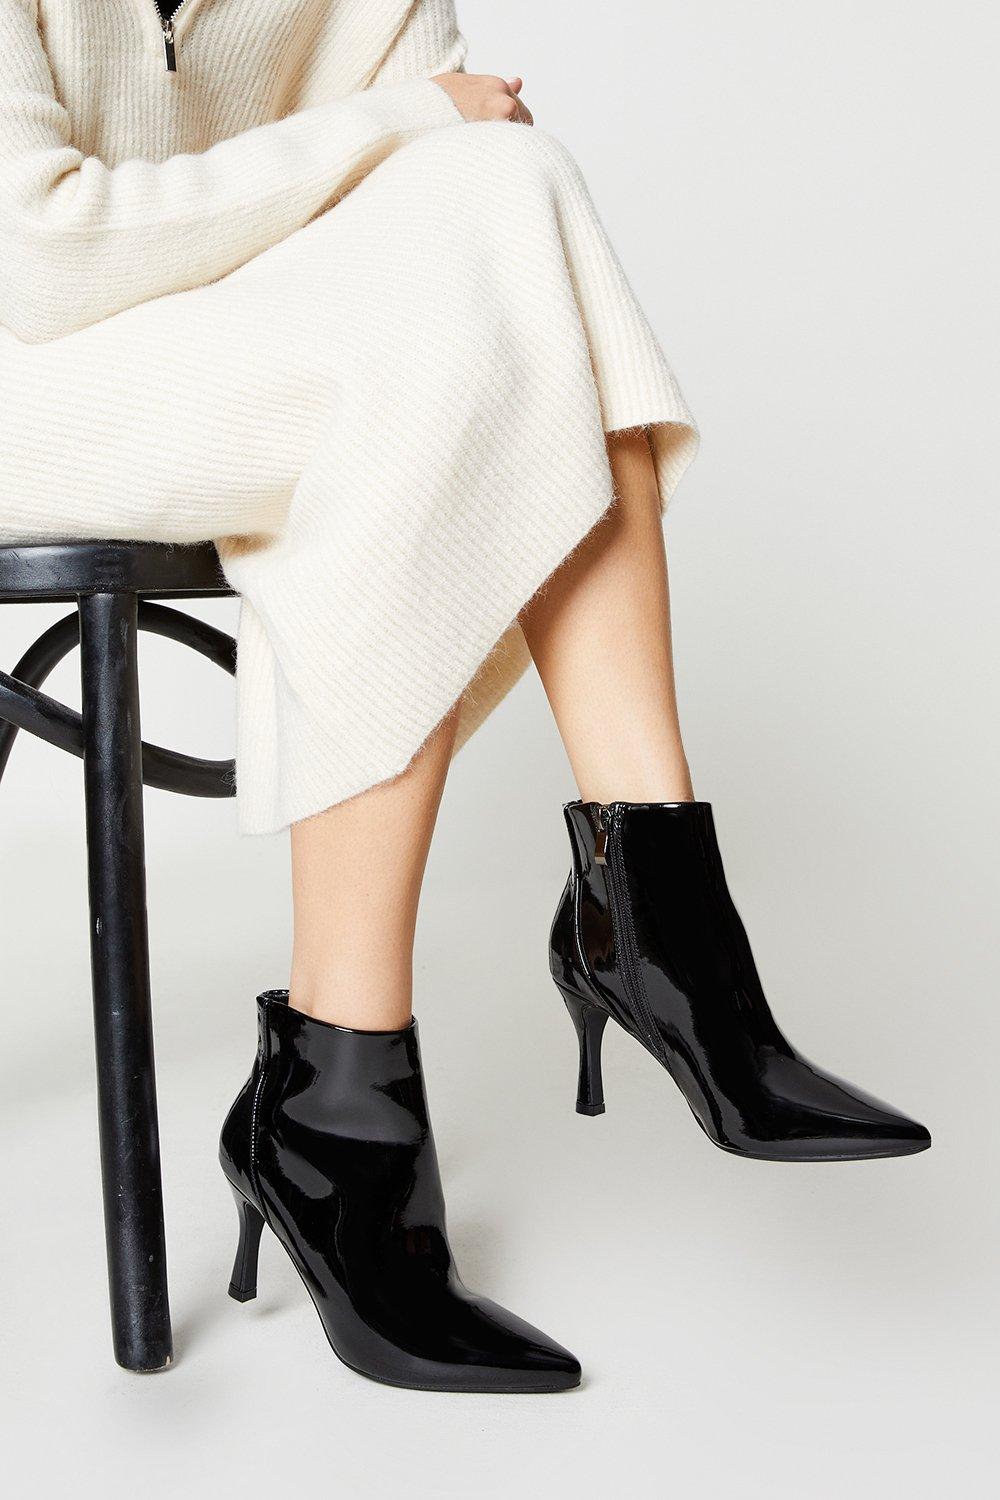 Women’s Mikki Patent Formal Ankle Boots - true black - 5